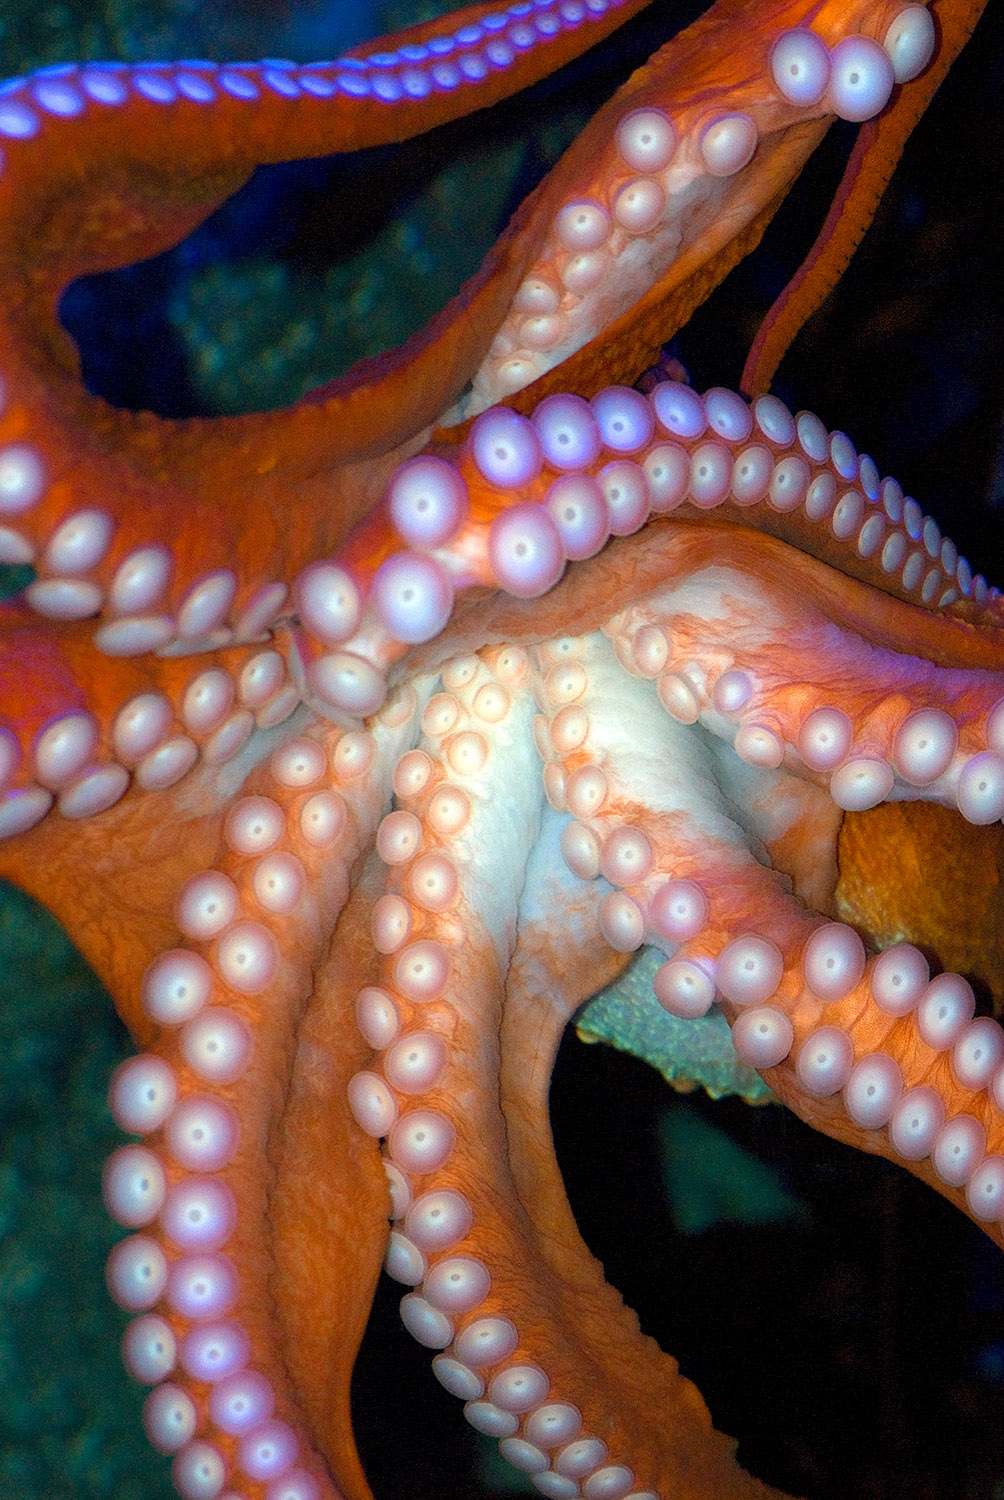 octopus-photo-image-024a.jpg